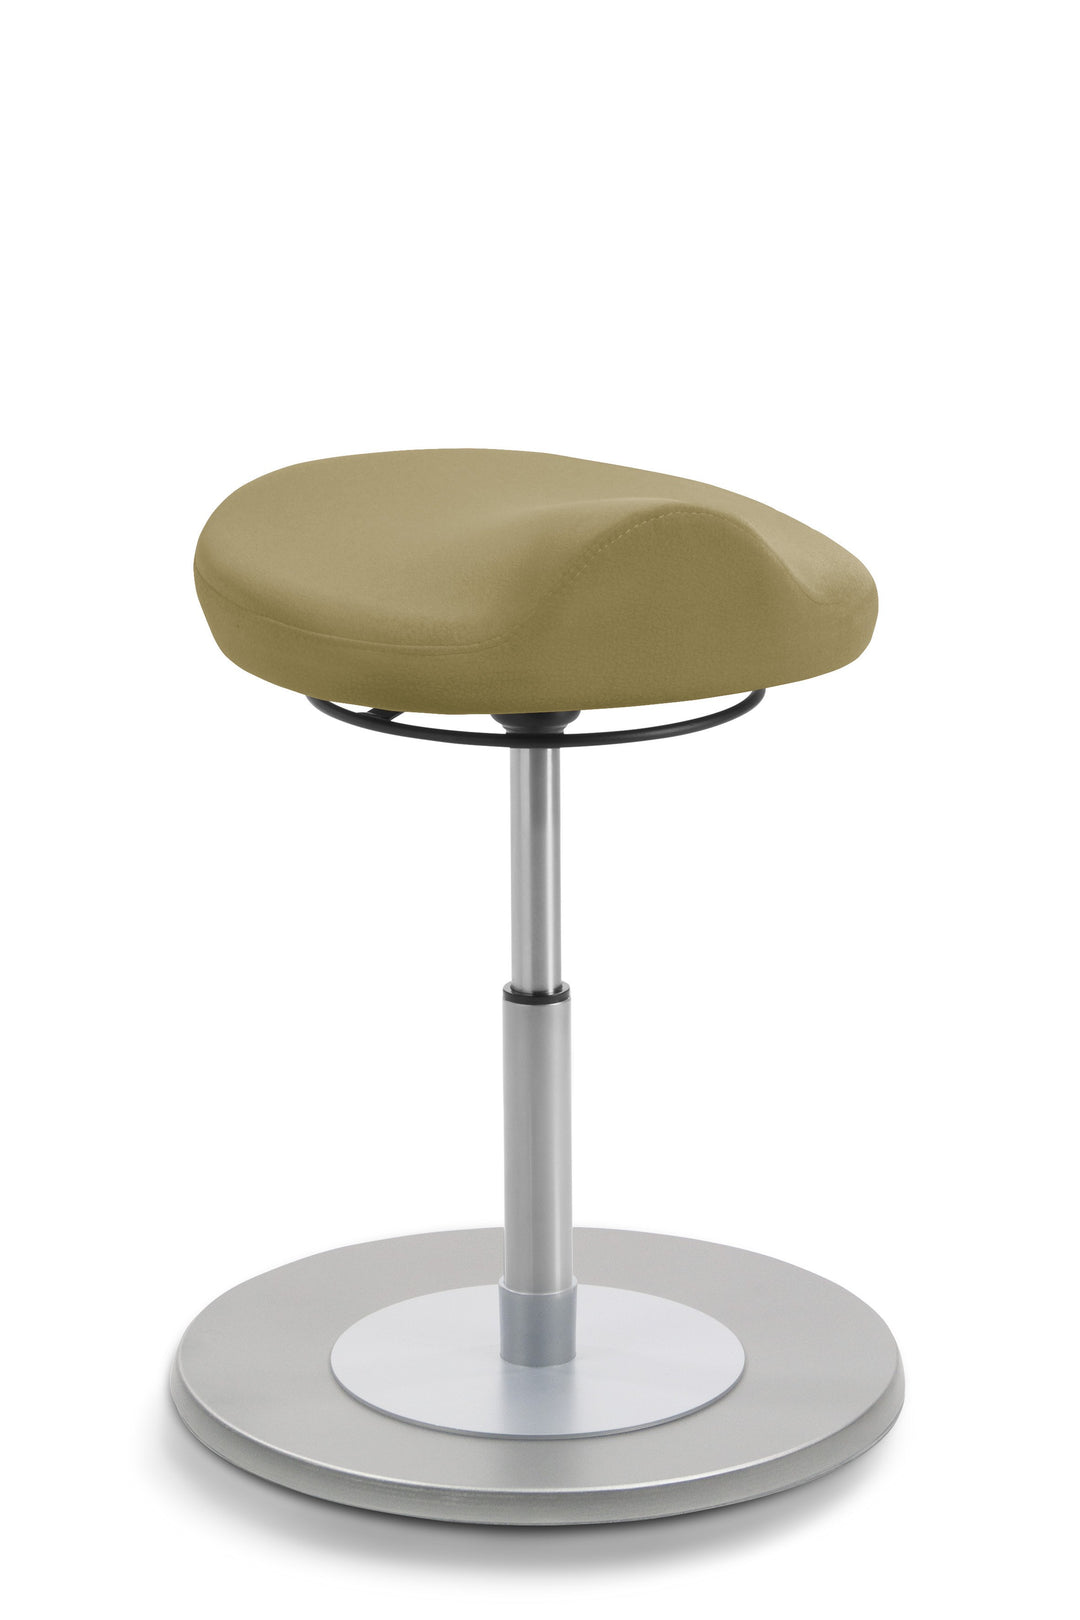 Mayer MyErgosit Taboret stołek balansujący Krzesło 3D 37-50cm podstawa srebrna 1102 EF